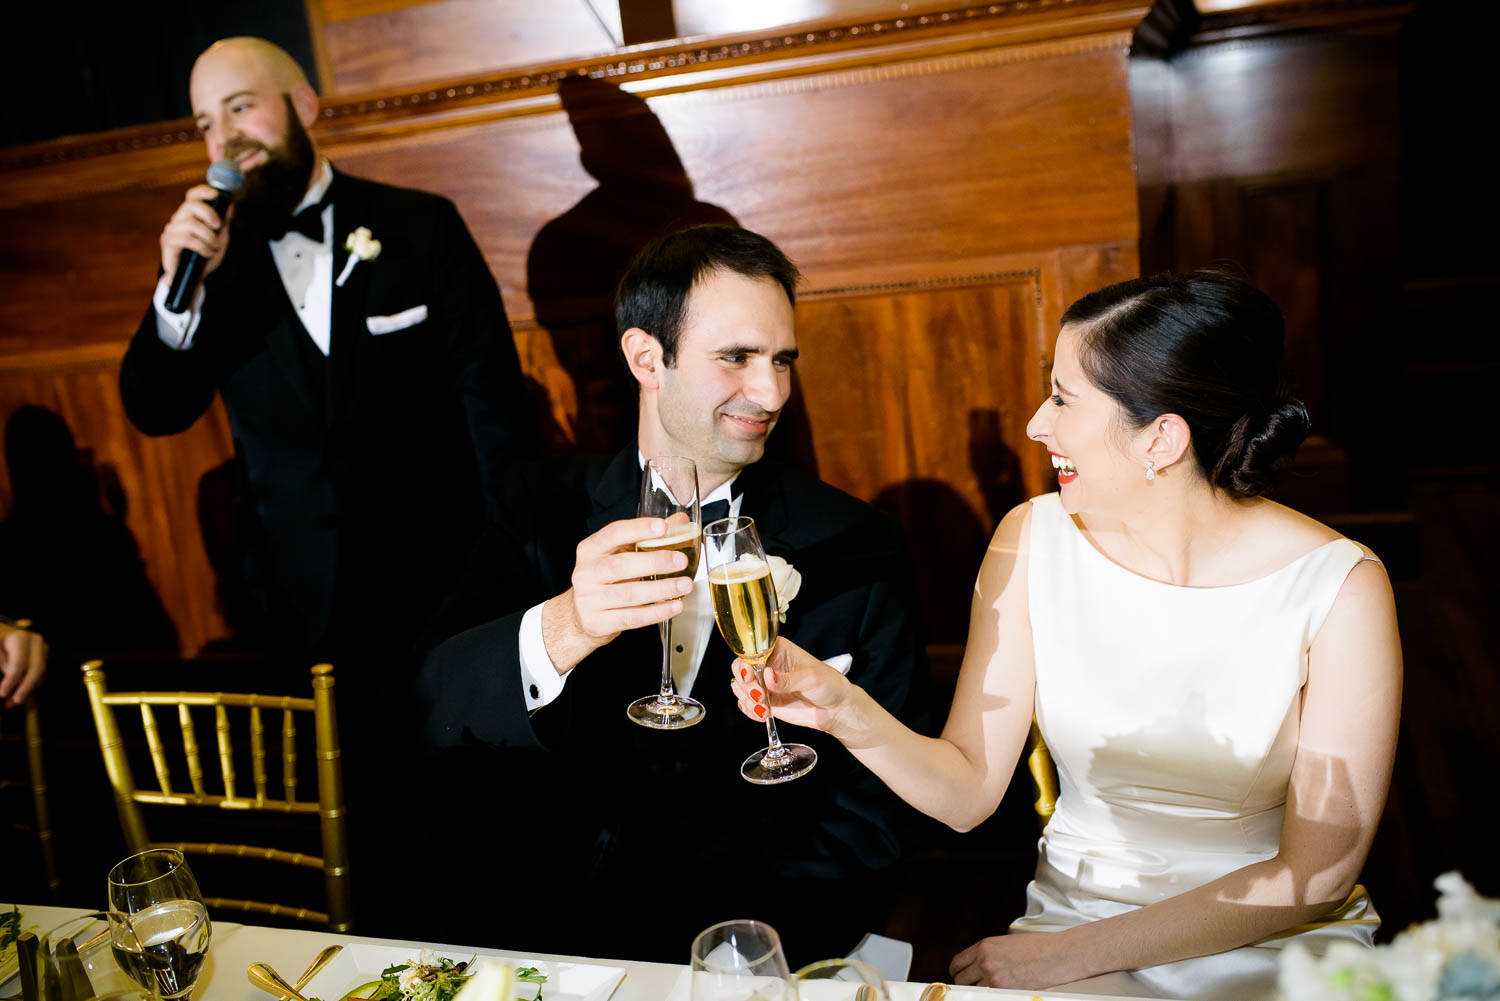 Art Institute of Chicago wedding in the Stock Exchange Room.